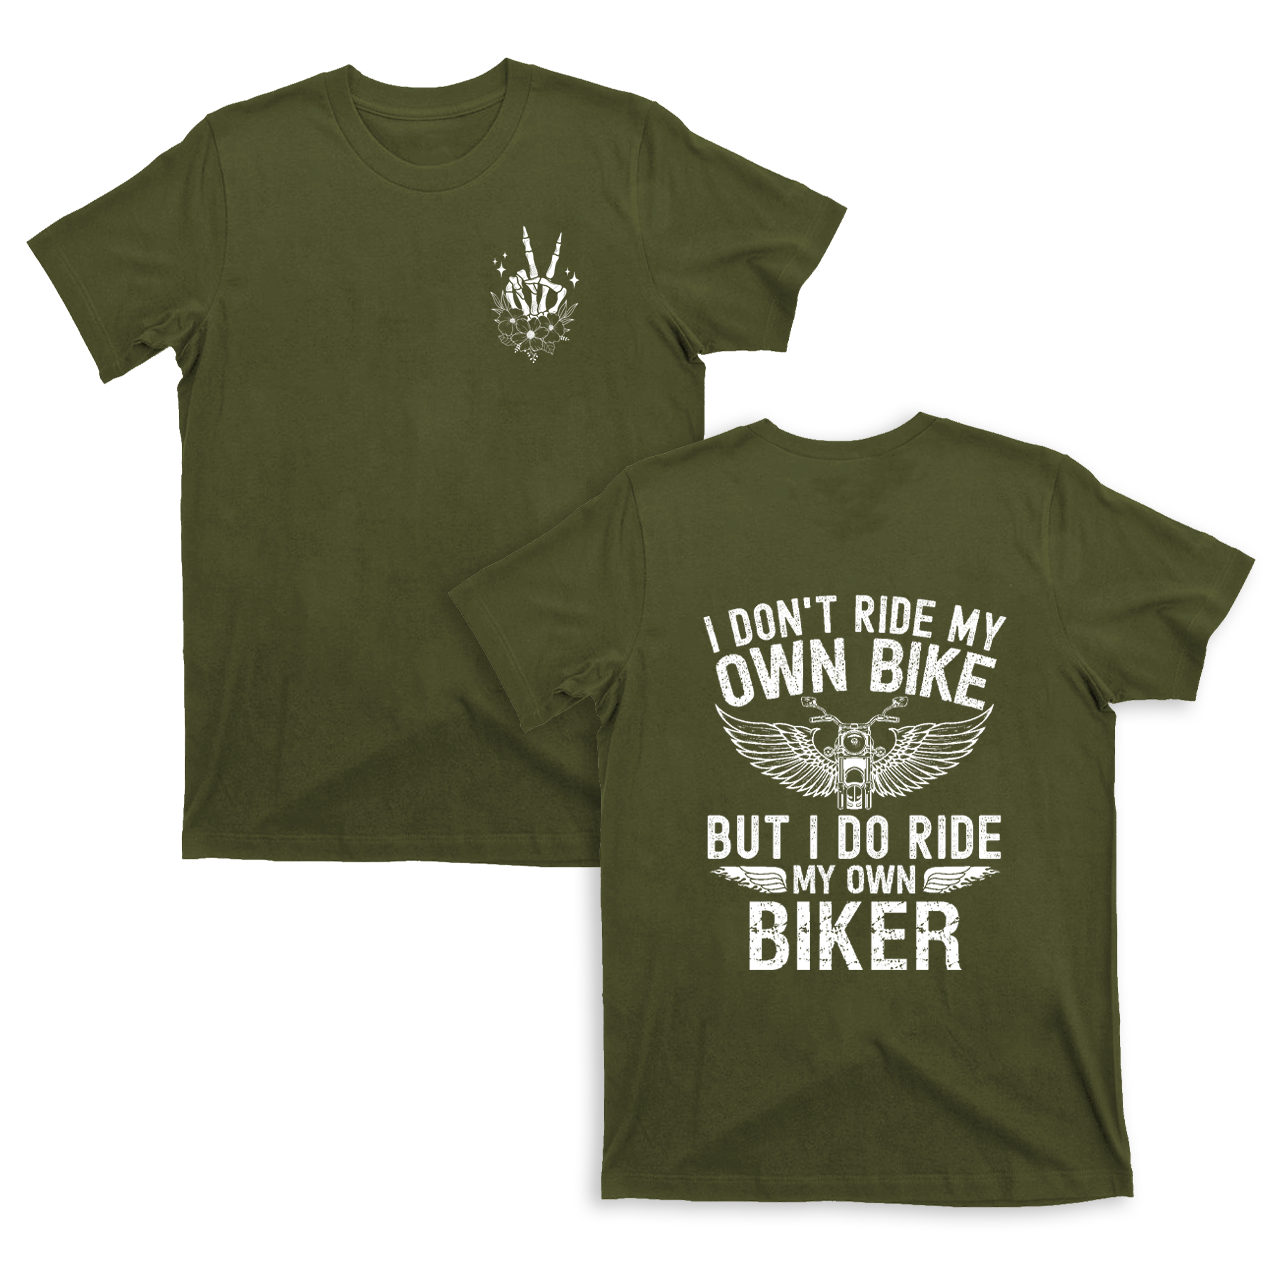 My Own Bike T-Shirts